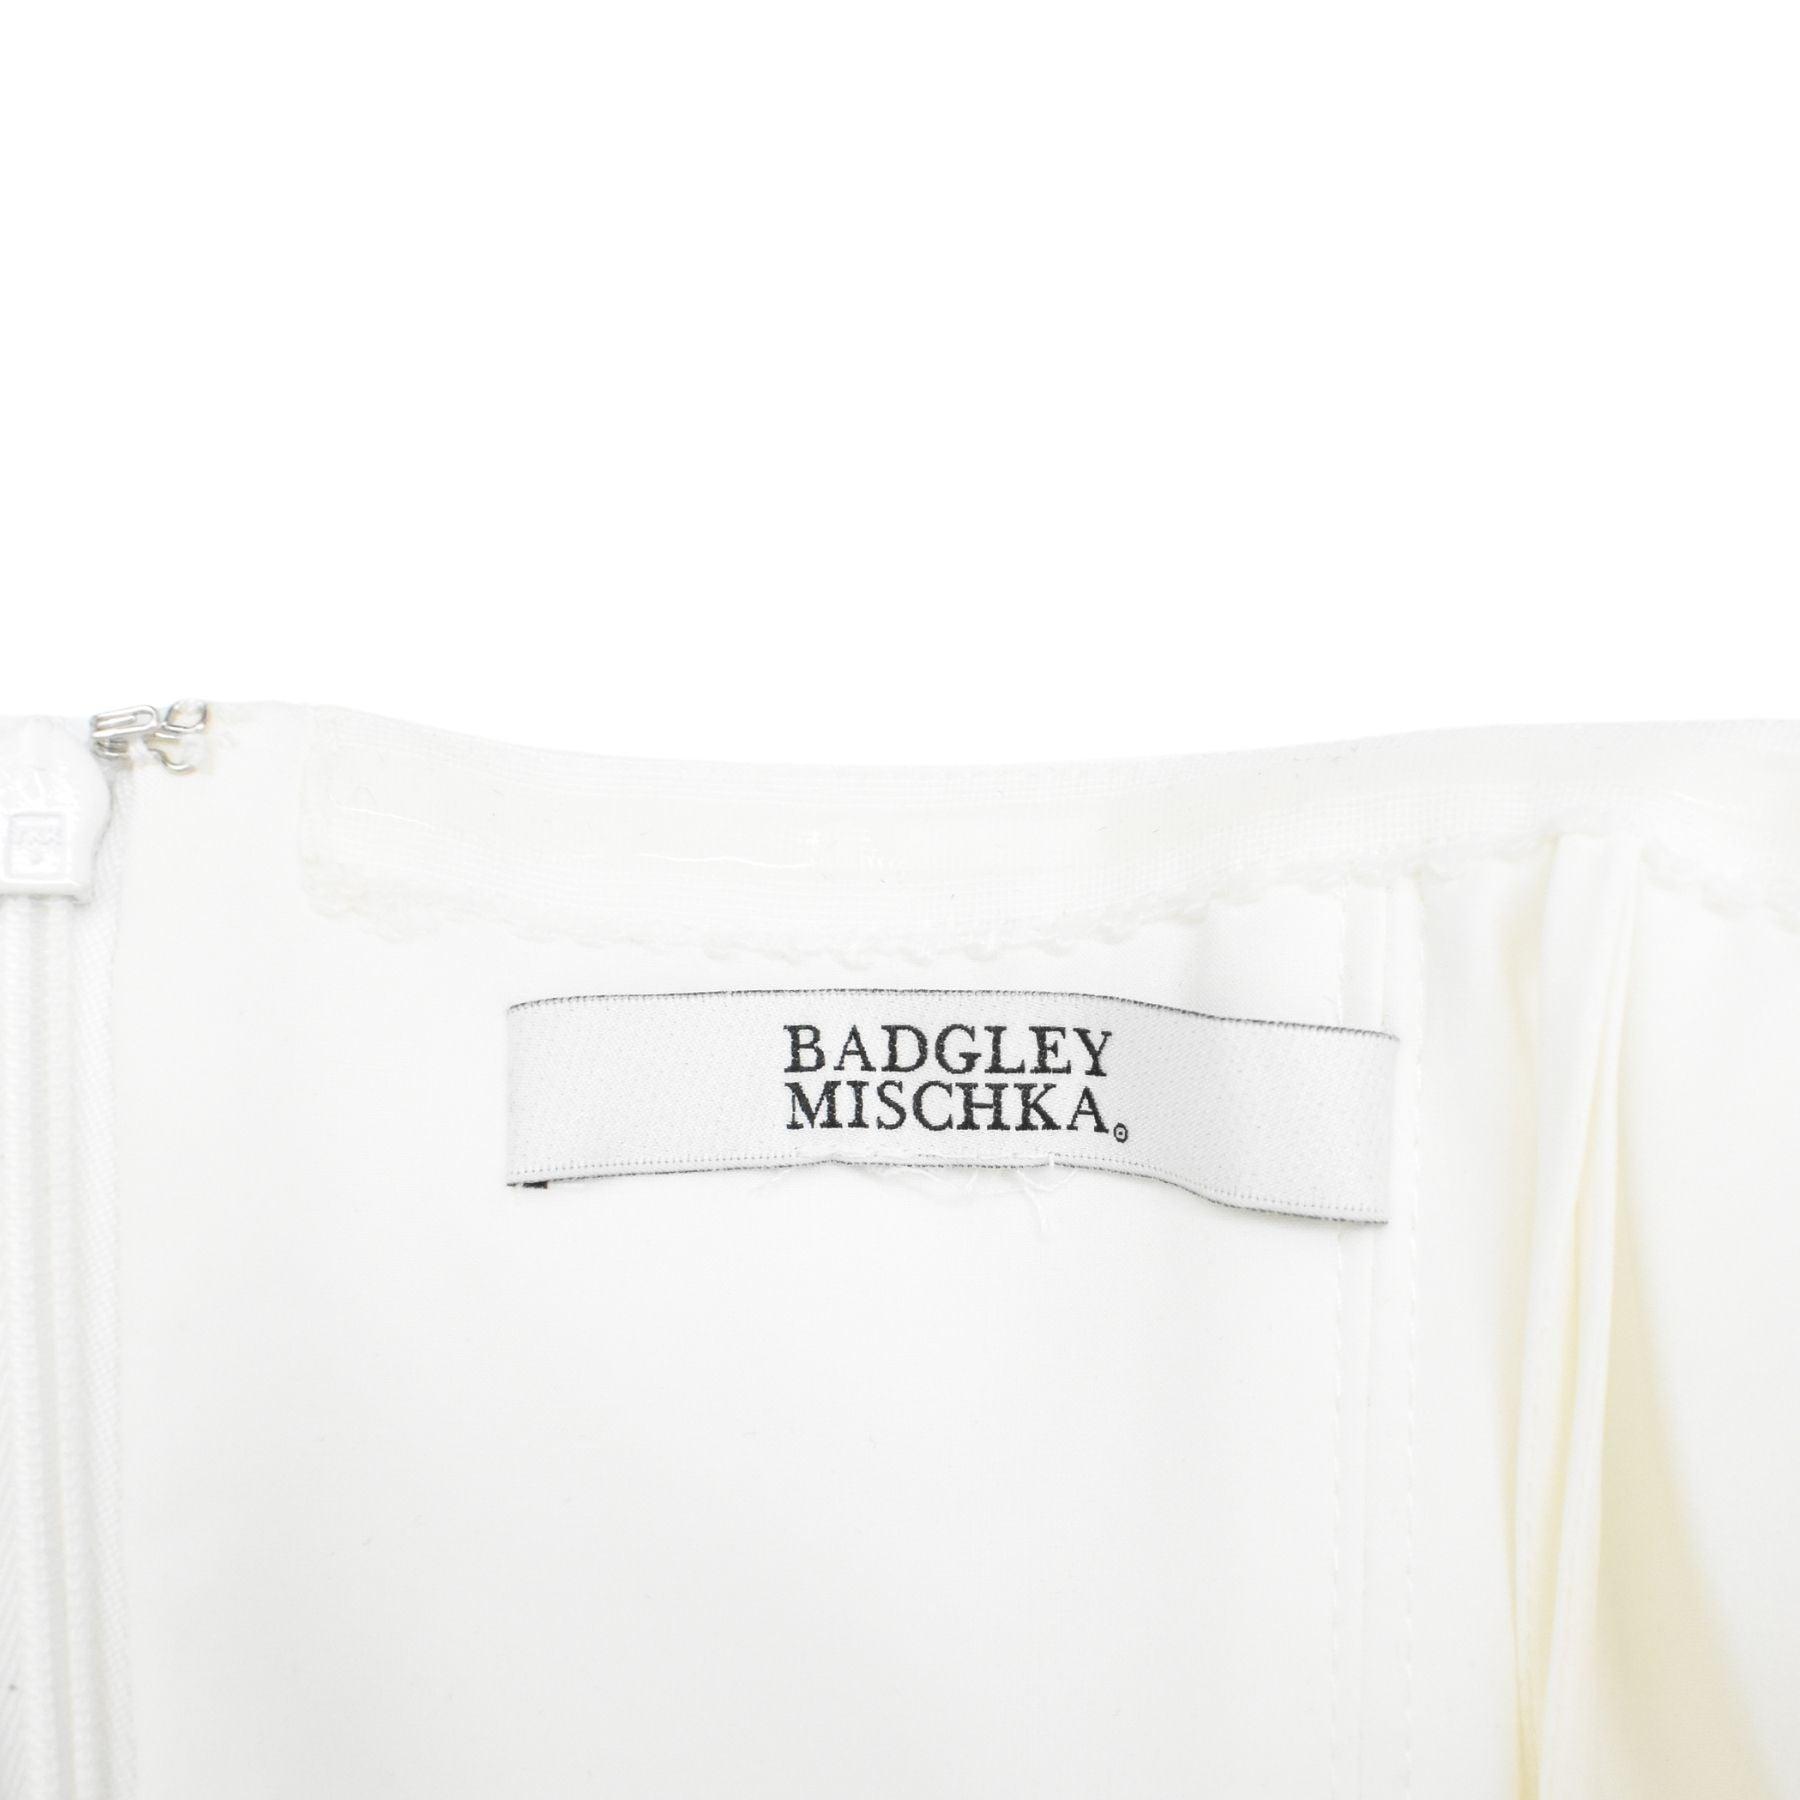 Badgley Mischka Strapless Dress - Women's M/L - Fashionably Yours